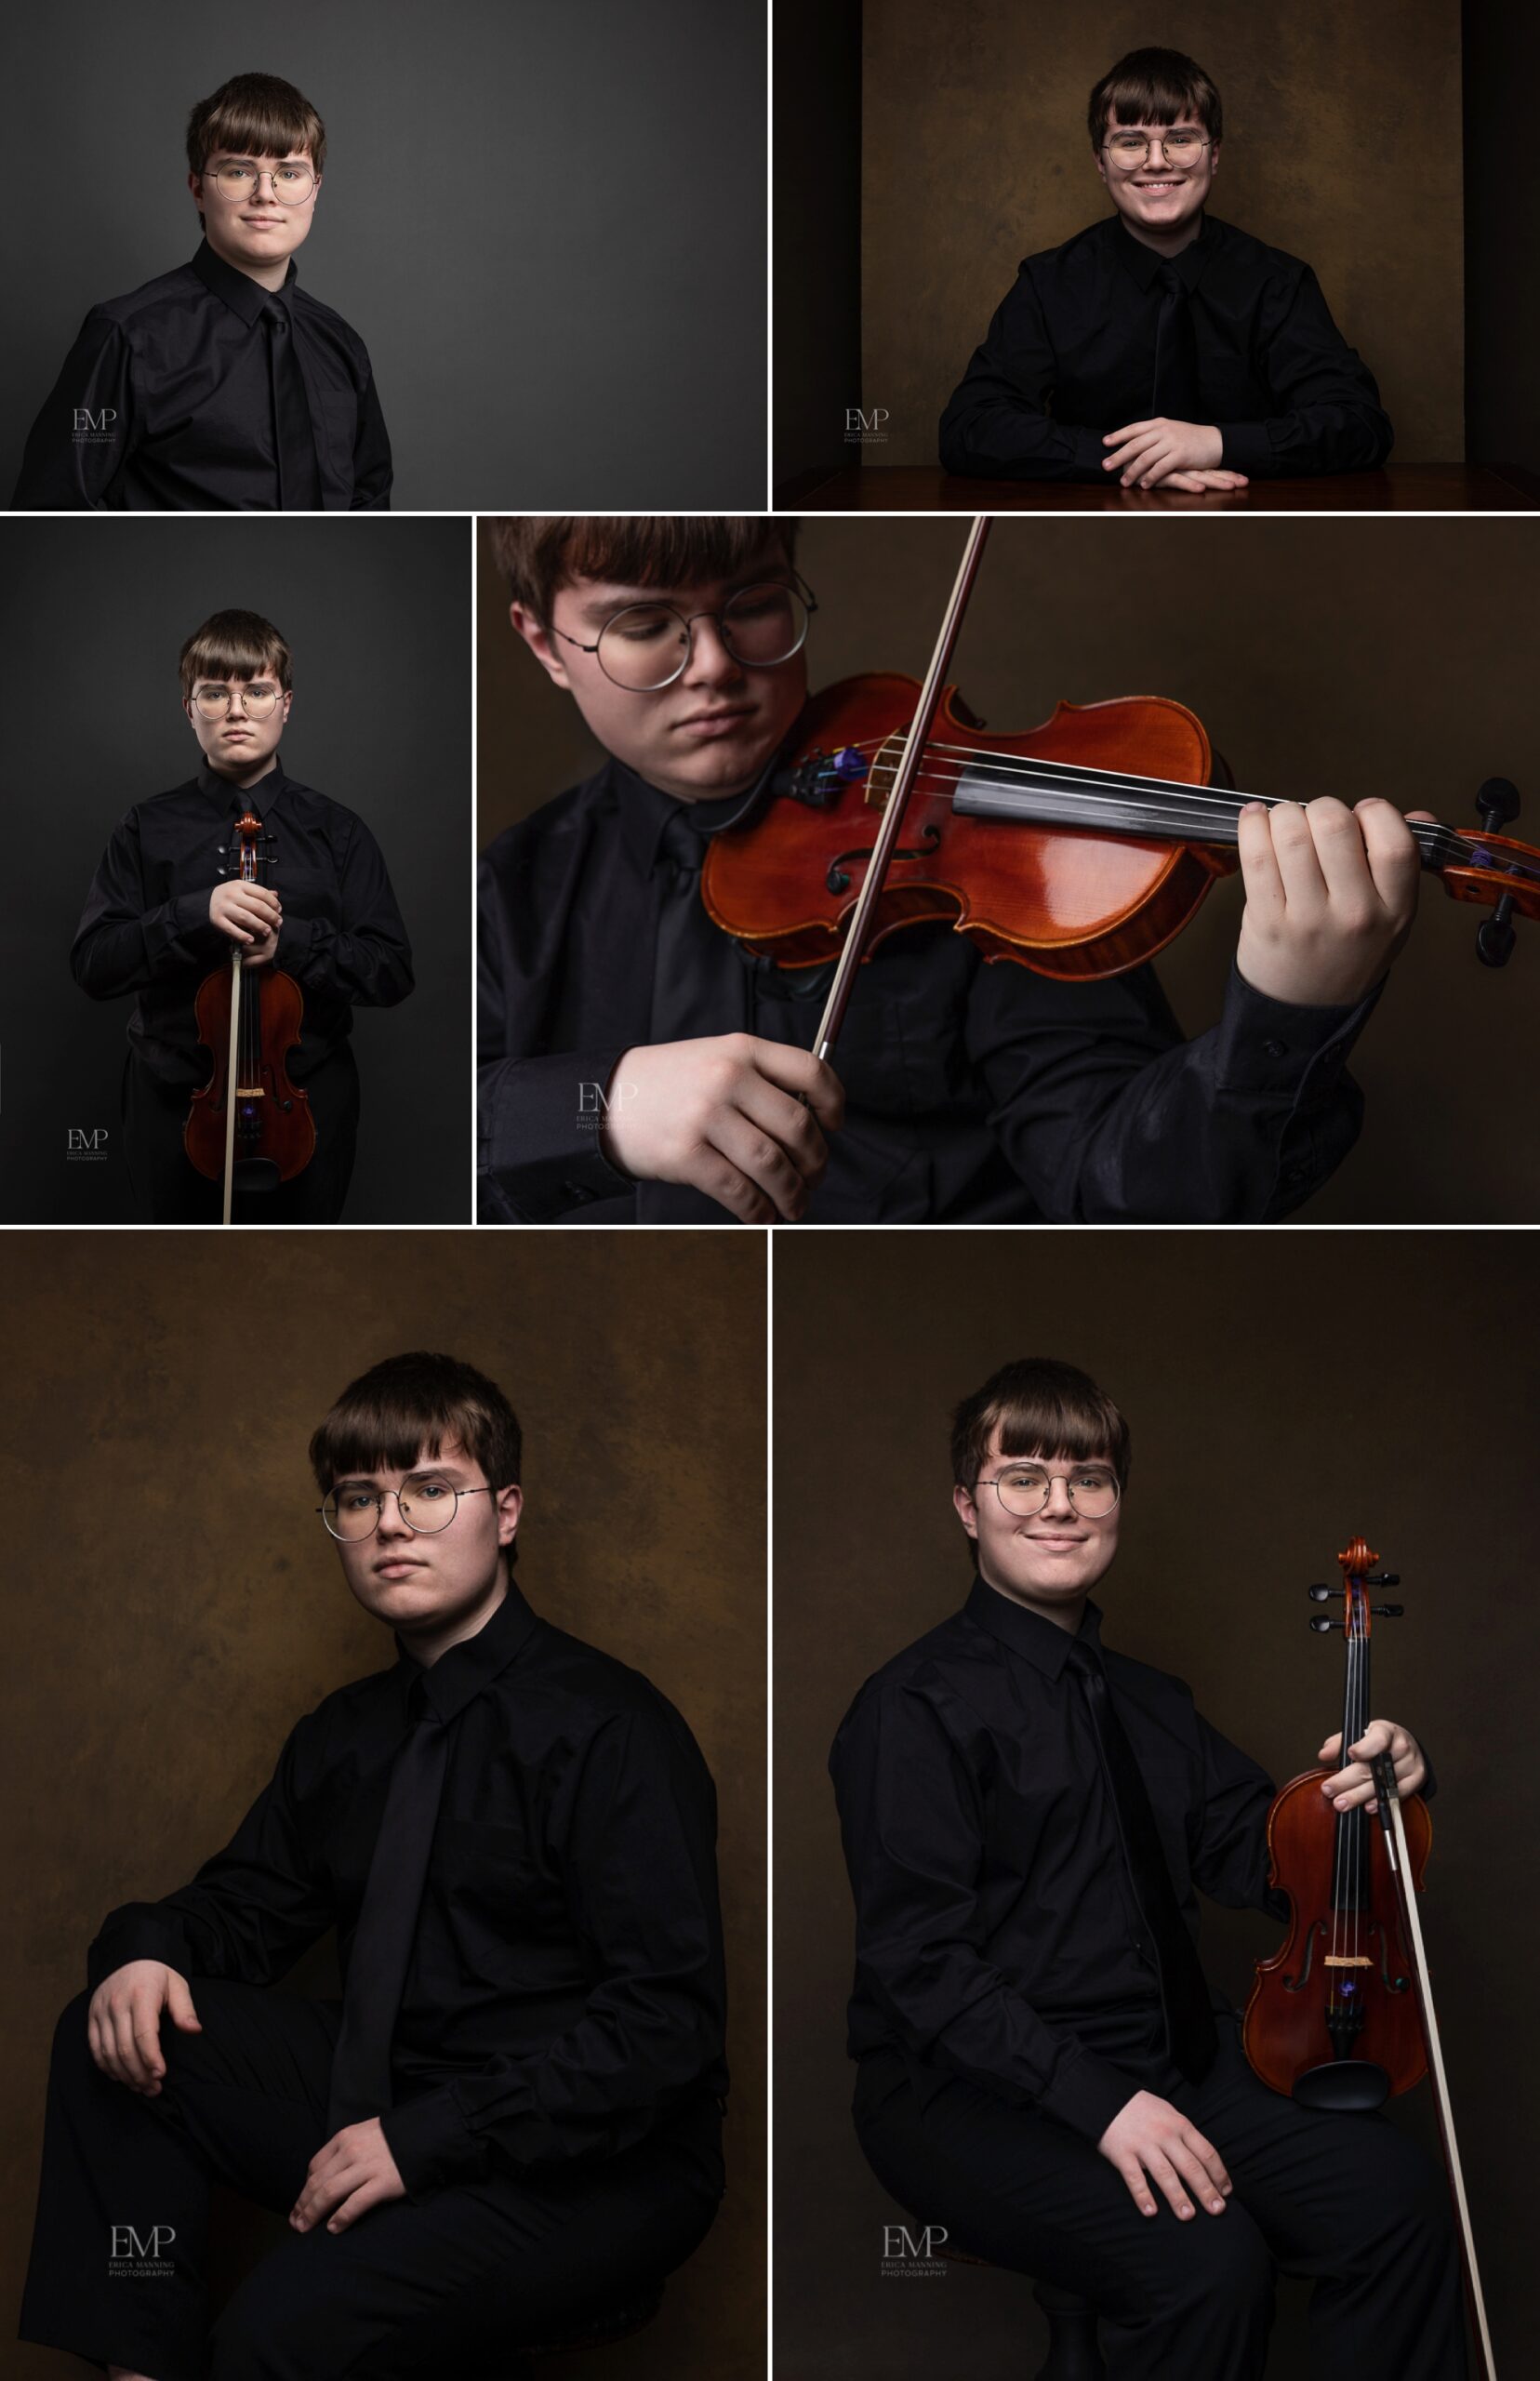 High school senior guy violin player studio portrait